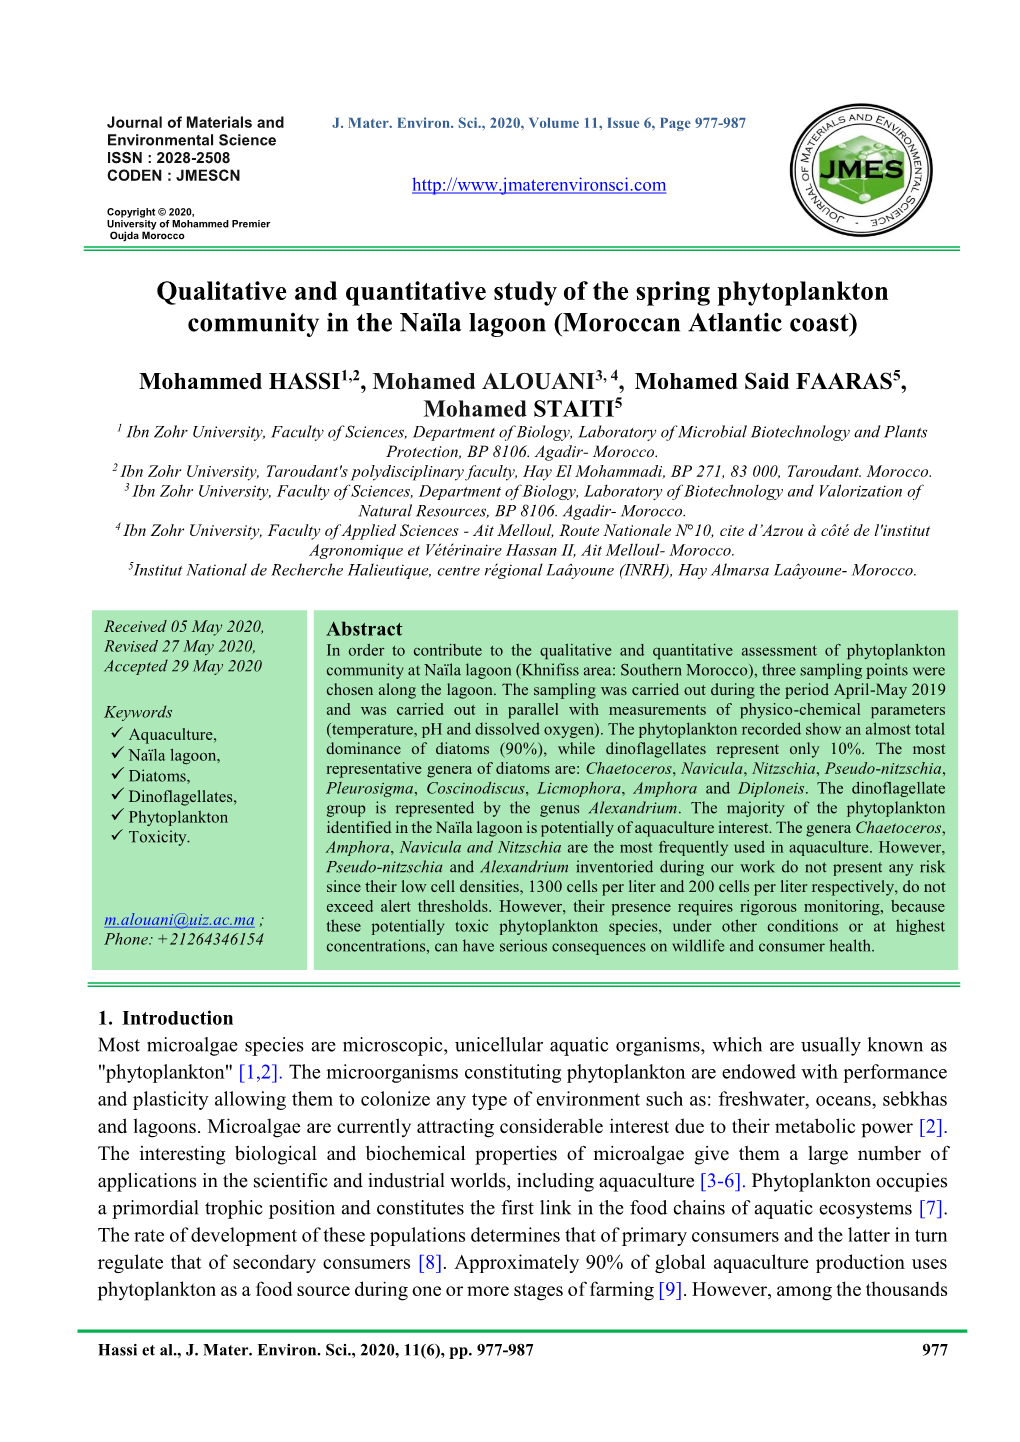 Qualitative and Quantitative Study of the Spring Phytoplankton Community in the Naïla Lagoon (Moroccan Atlantic Coast)